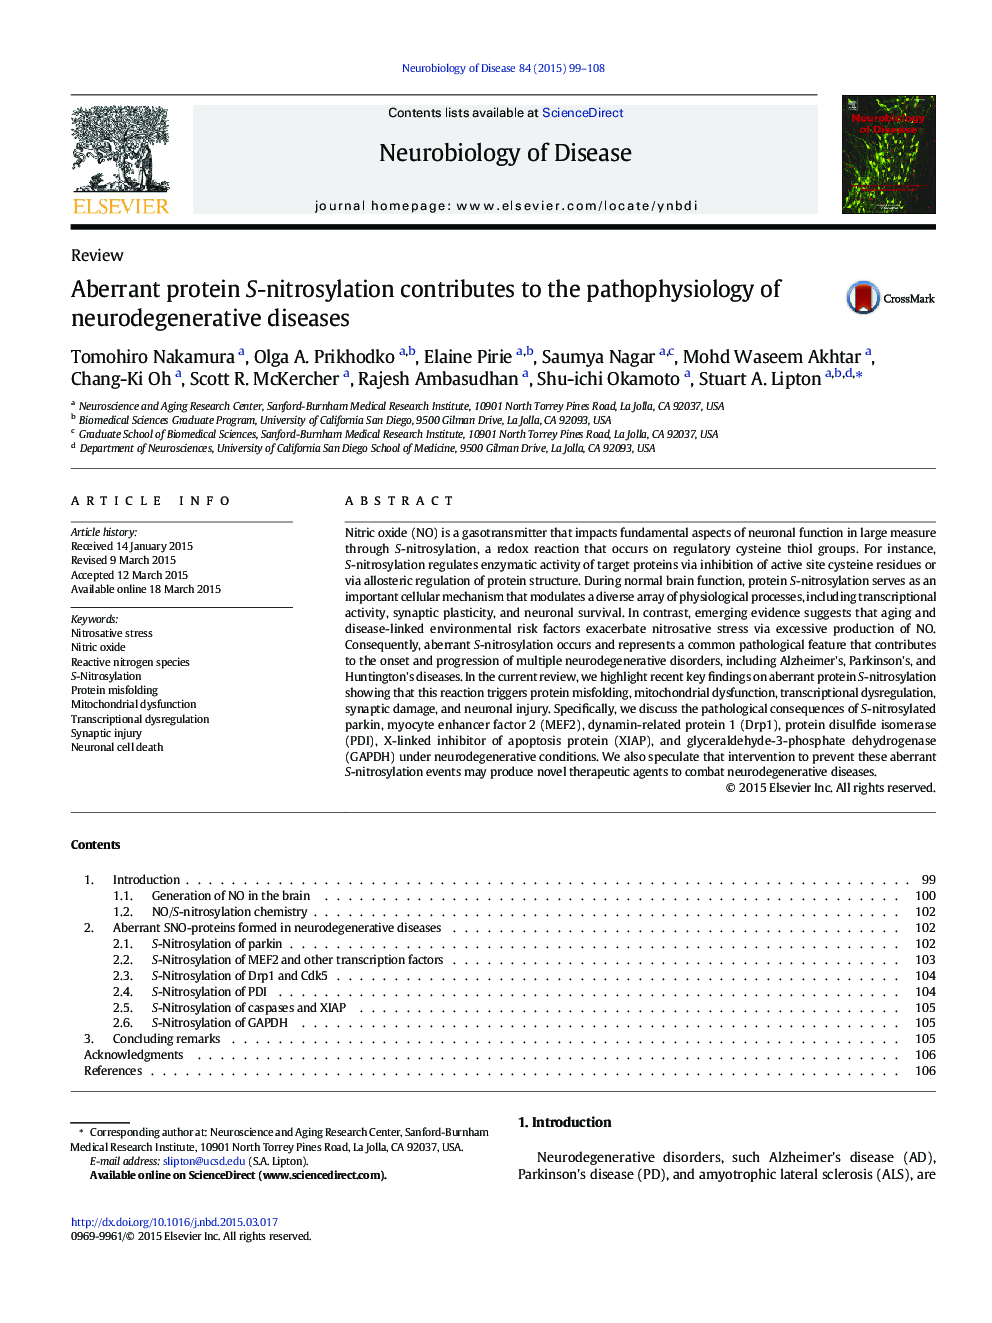 Aberrant protein S-nitrosylation contributes to the pathophysiology of neurodegenerative diseases